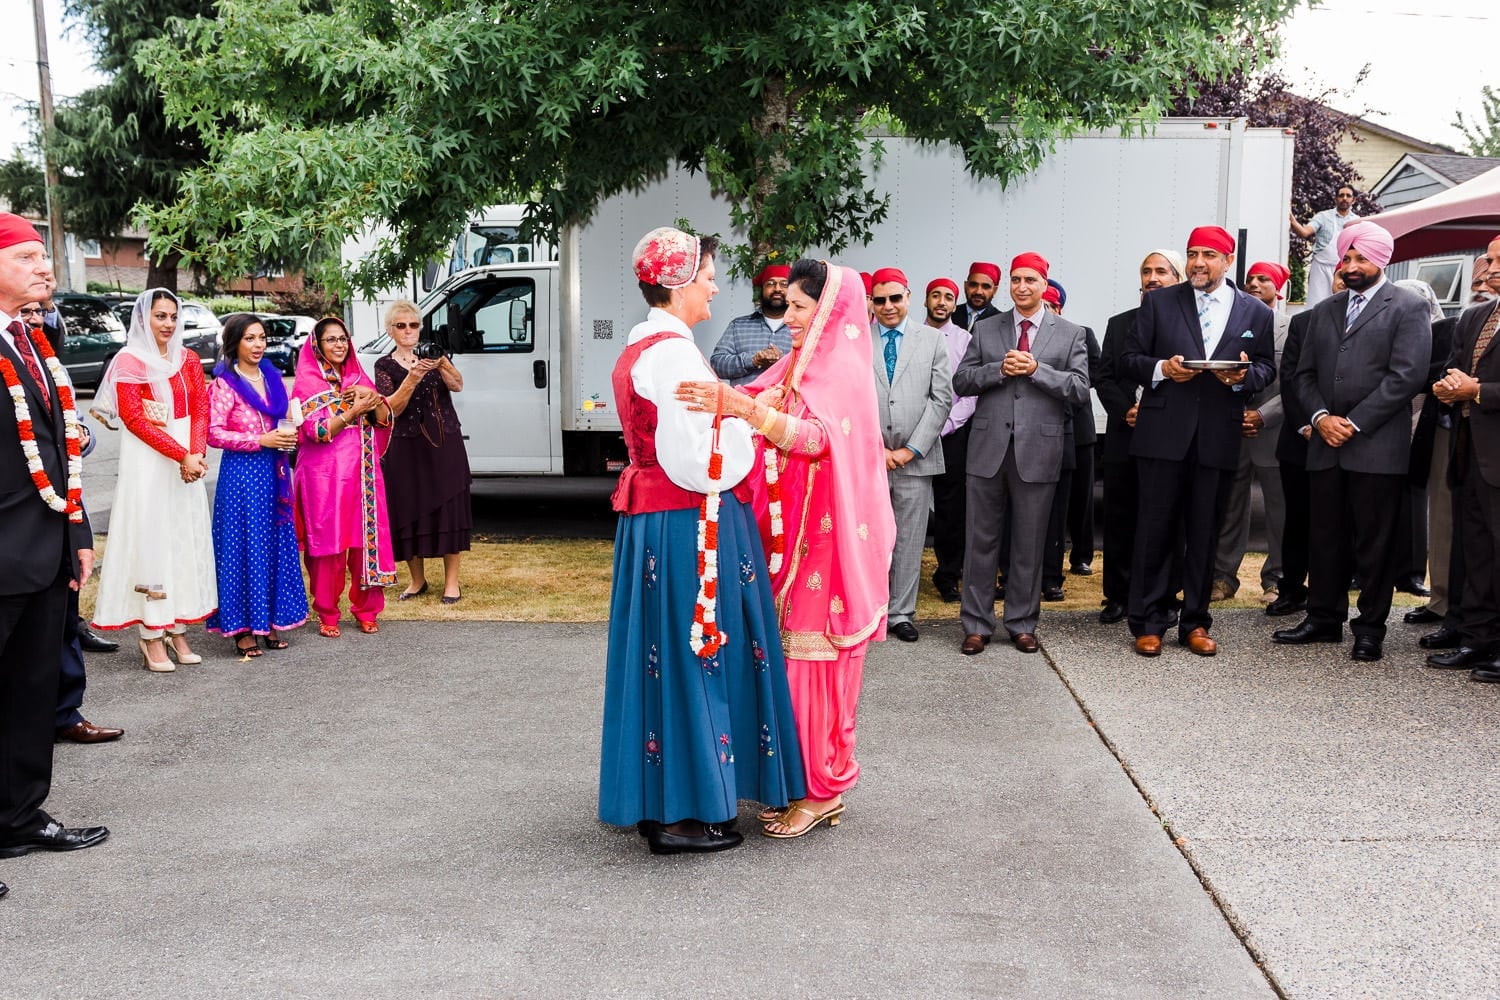 Milni ceremony, Indian and Norwegian wedding | Vancouver Indian wedding photographer